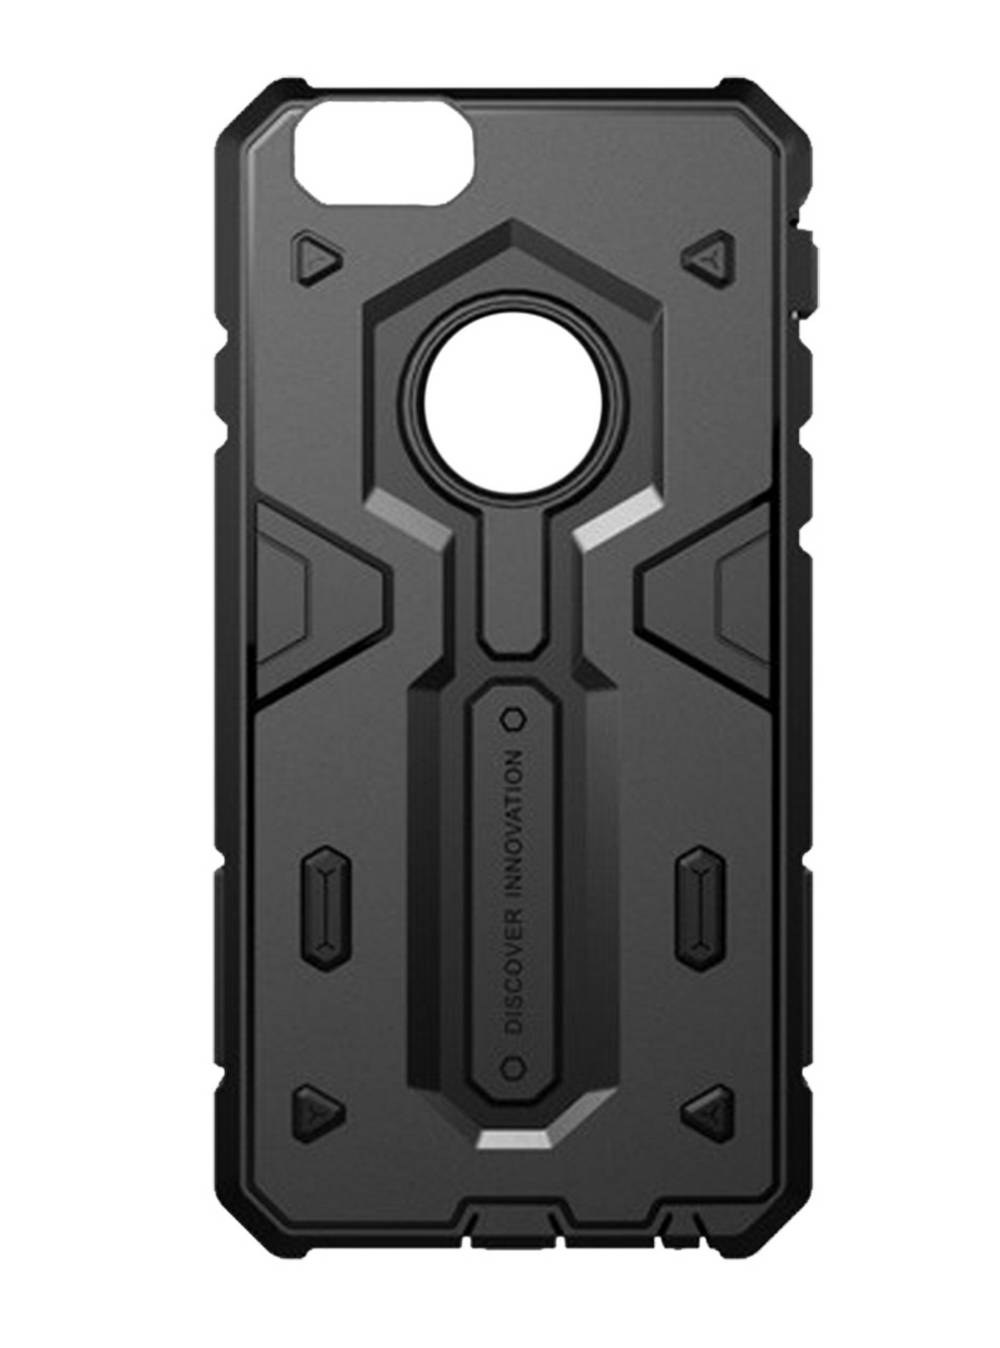 Pouzdro Nillkin Defender II na iPhone 6/6S černé